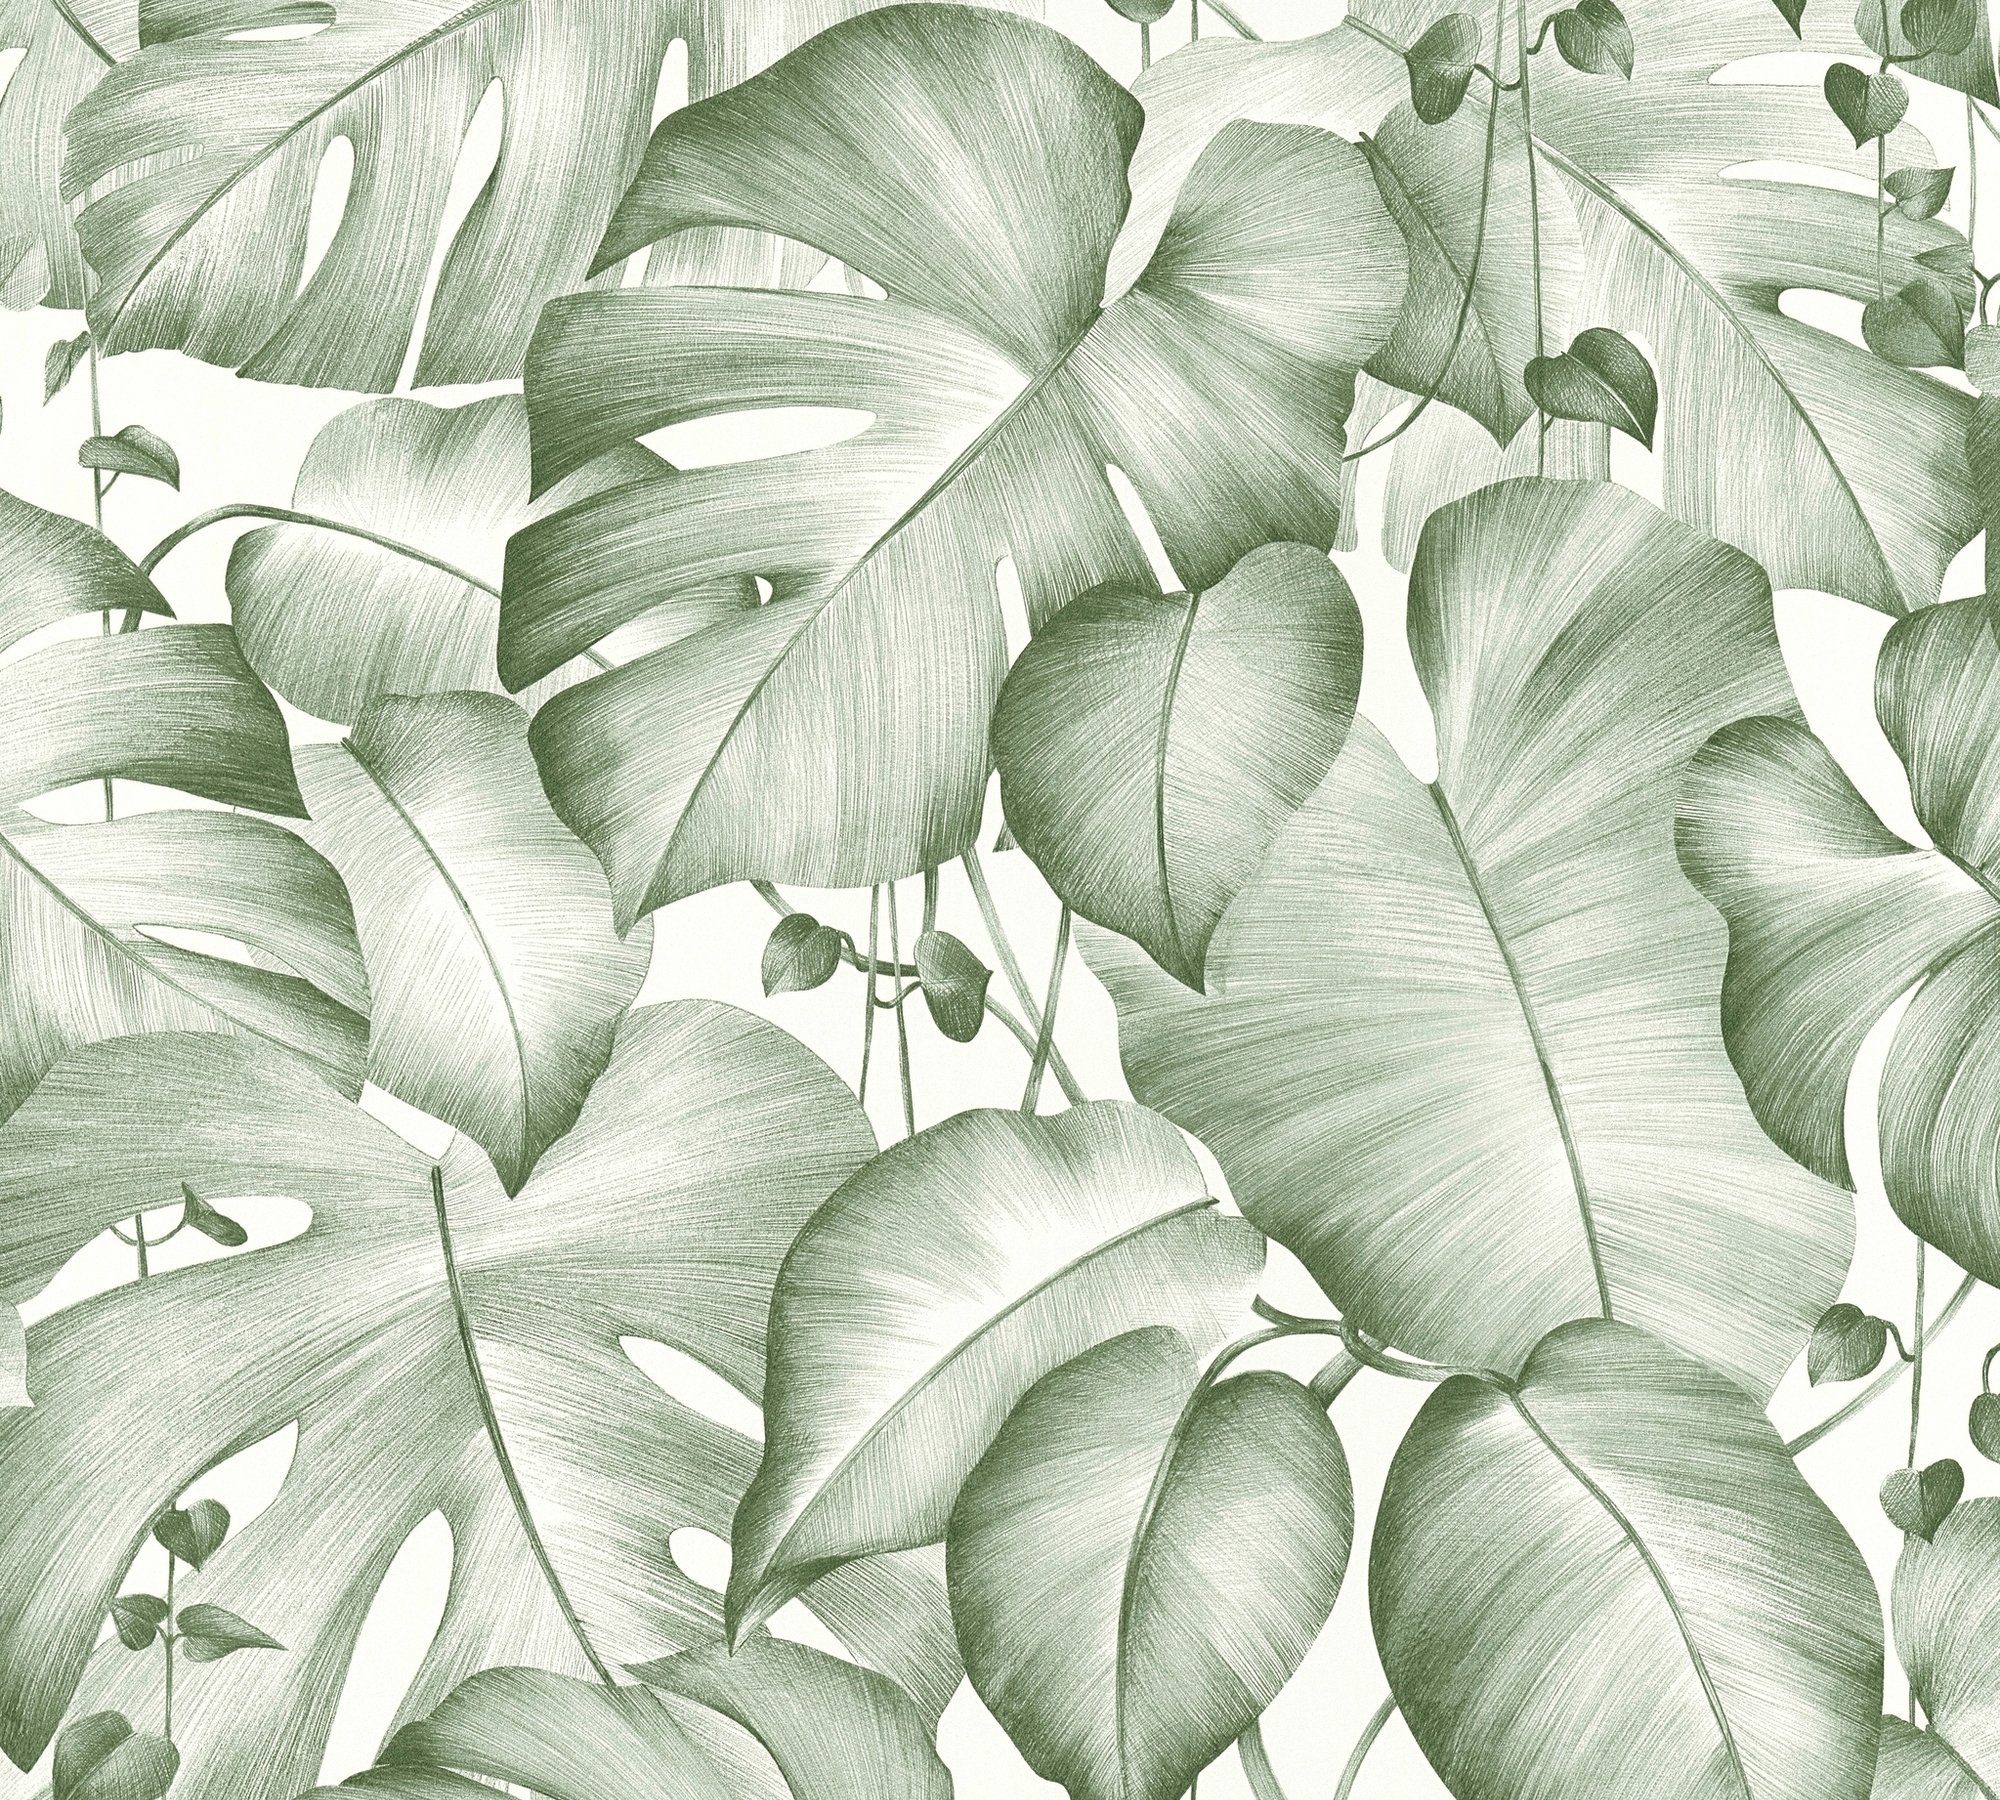 living m Dschungel Panel Up x Grün Weiß Tapete 2,50 Palmen 3D, Vinyltapete Selbstklebend m Panel 0,52 Pop strukturiert, walls floral,